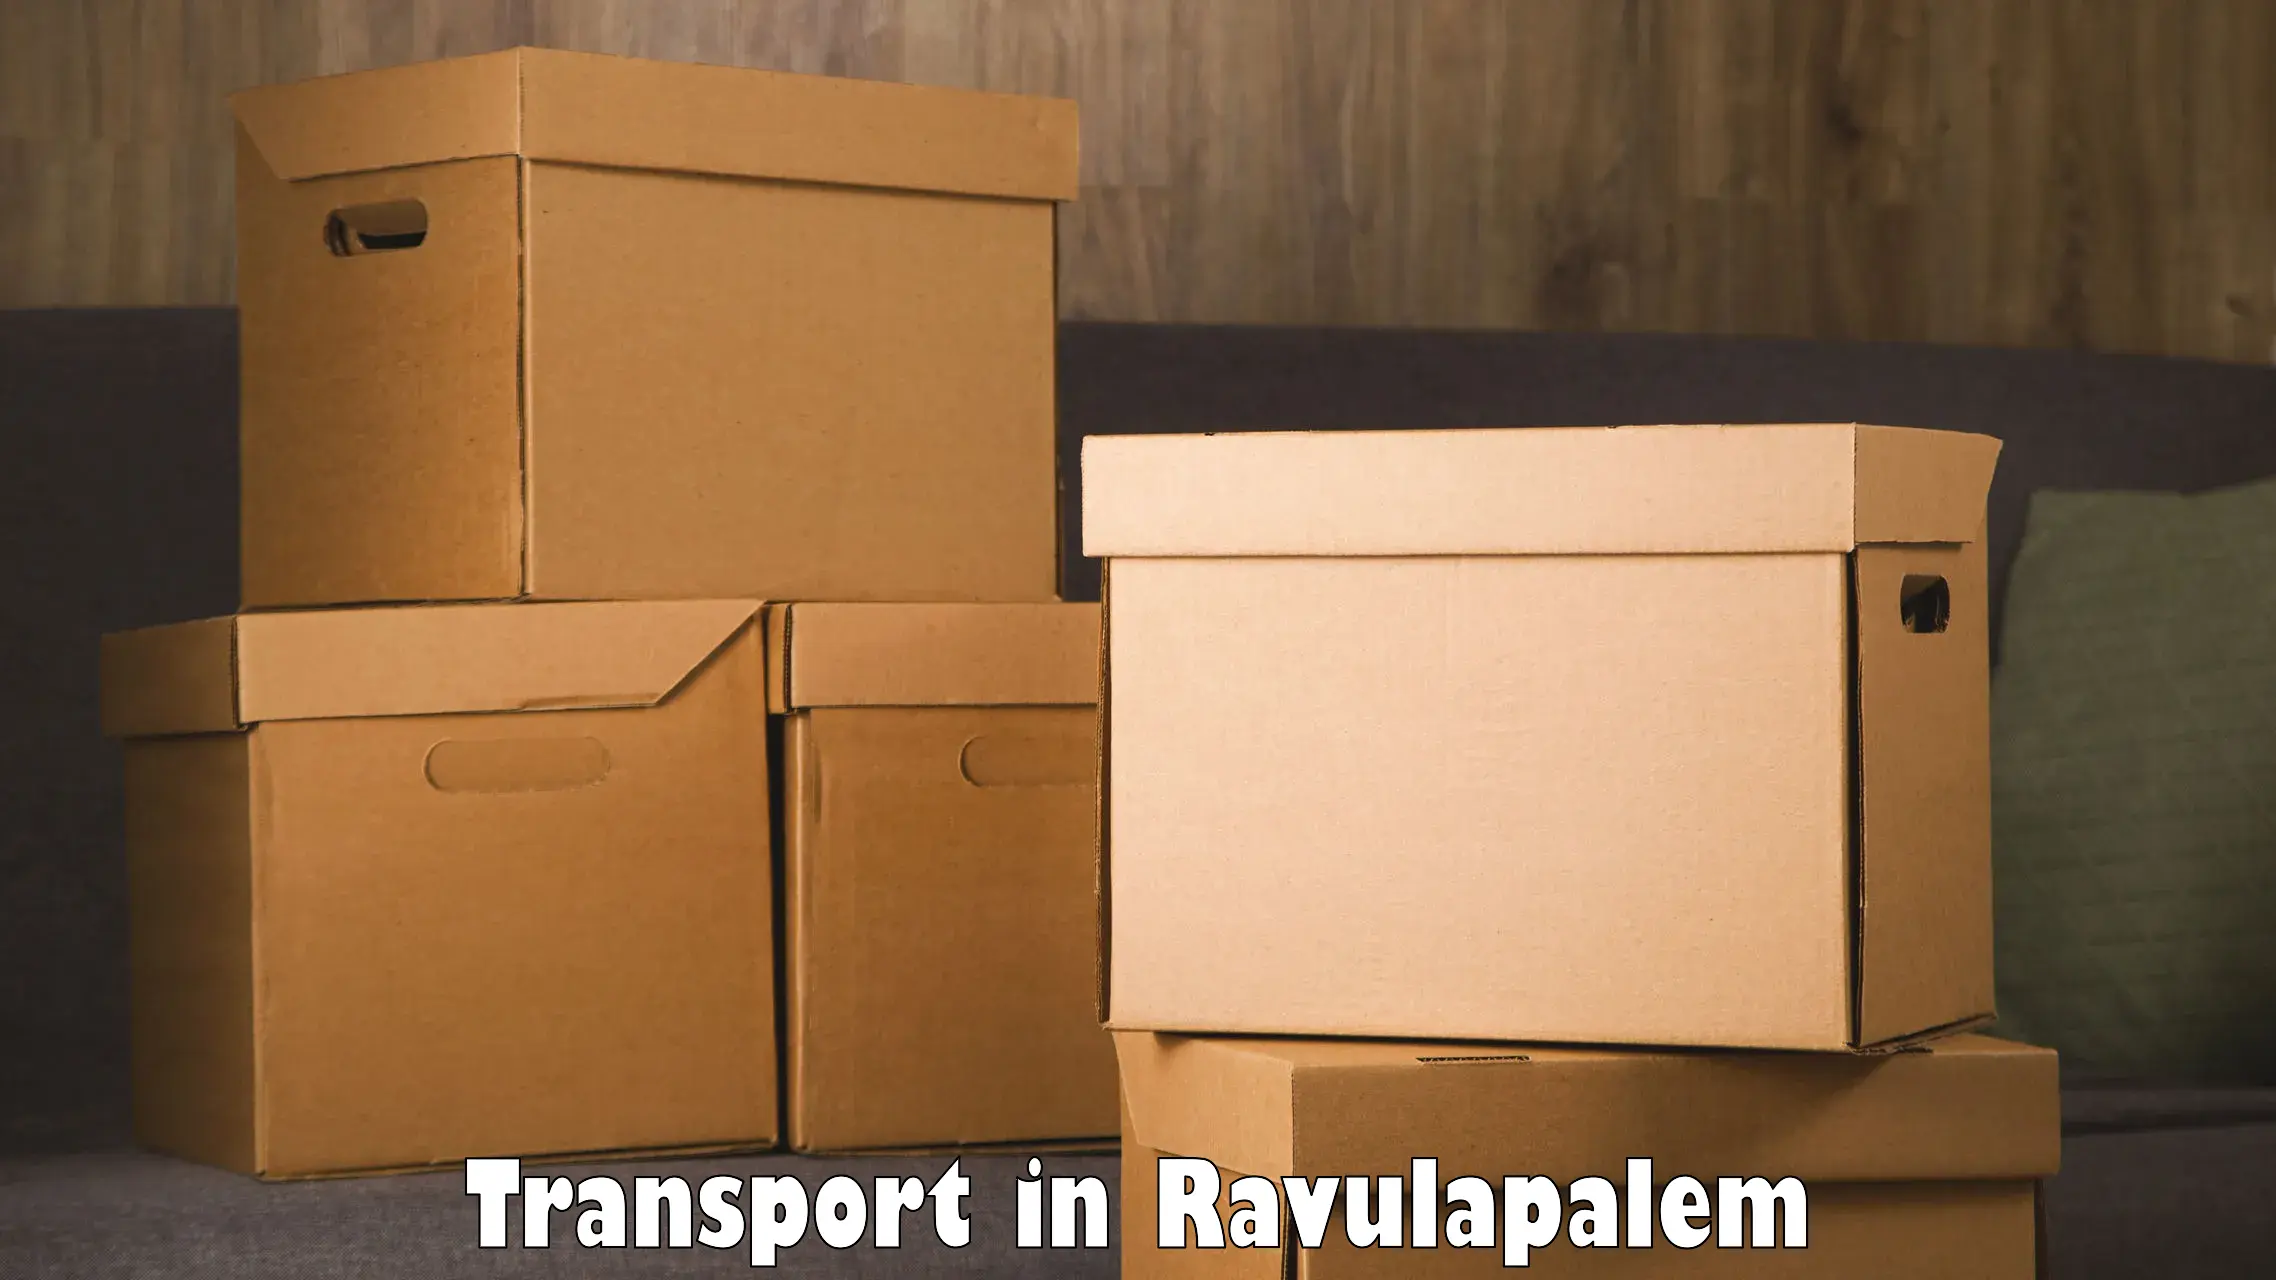 Transport shared services in Ravulapalem